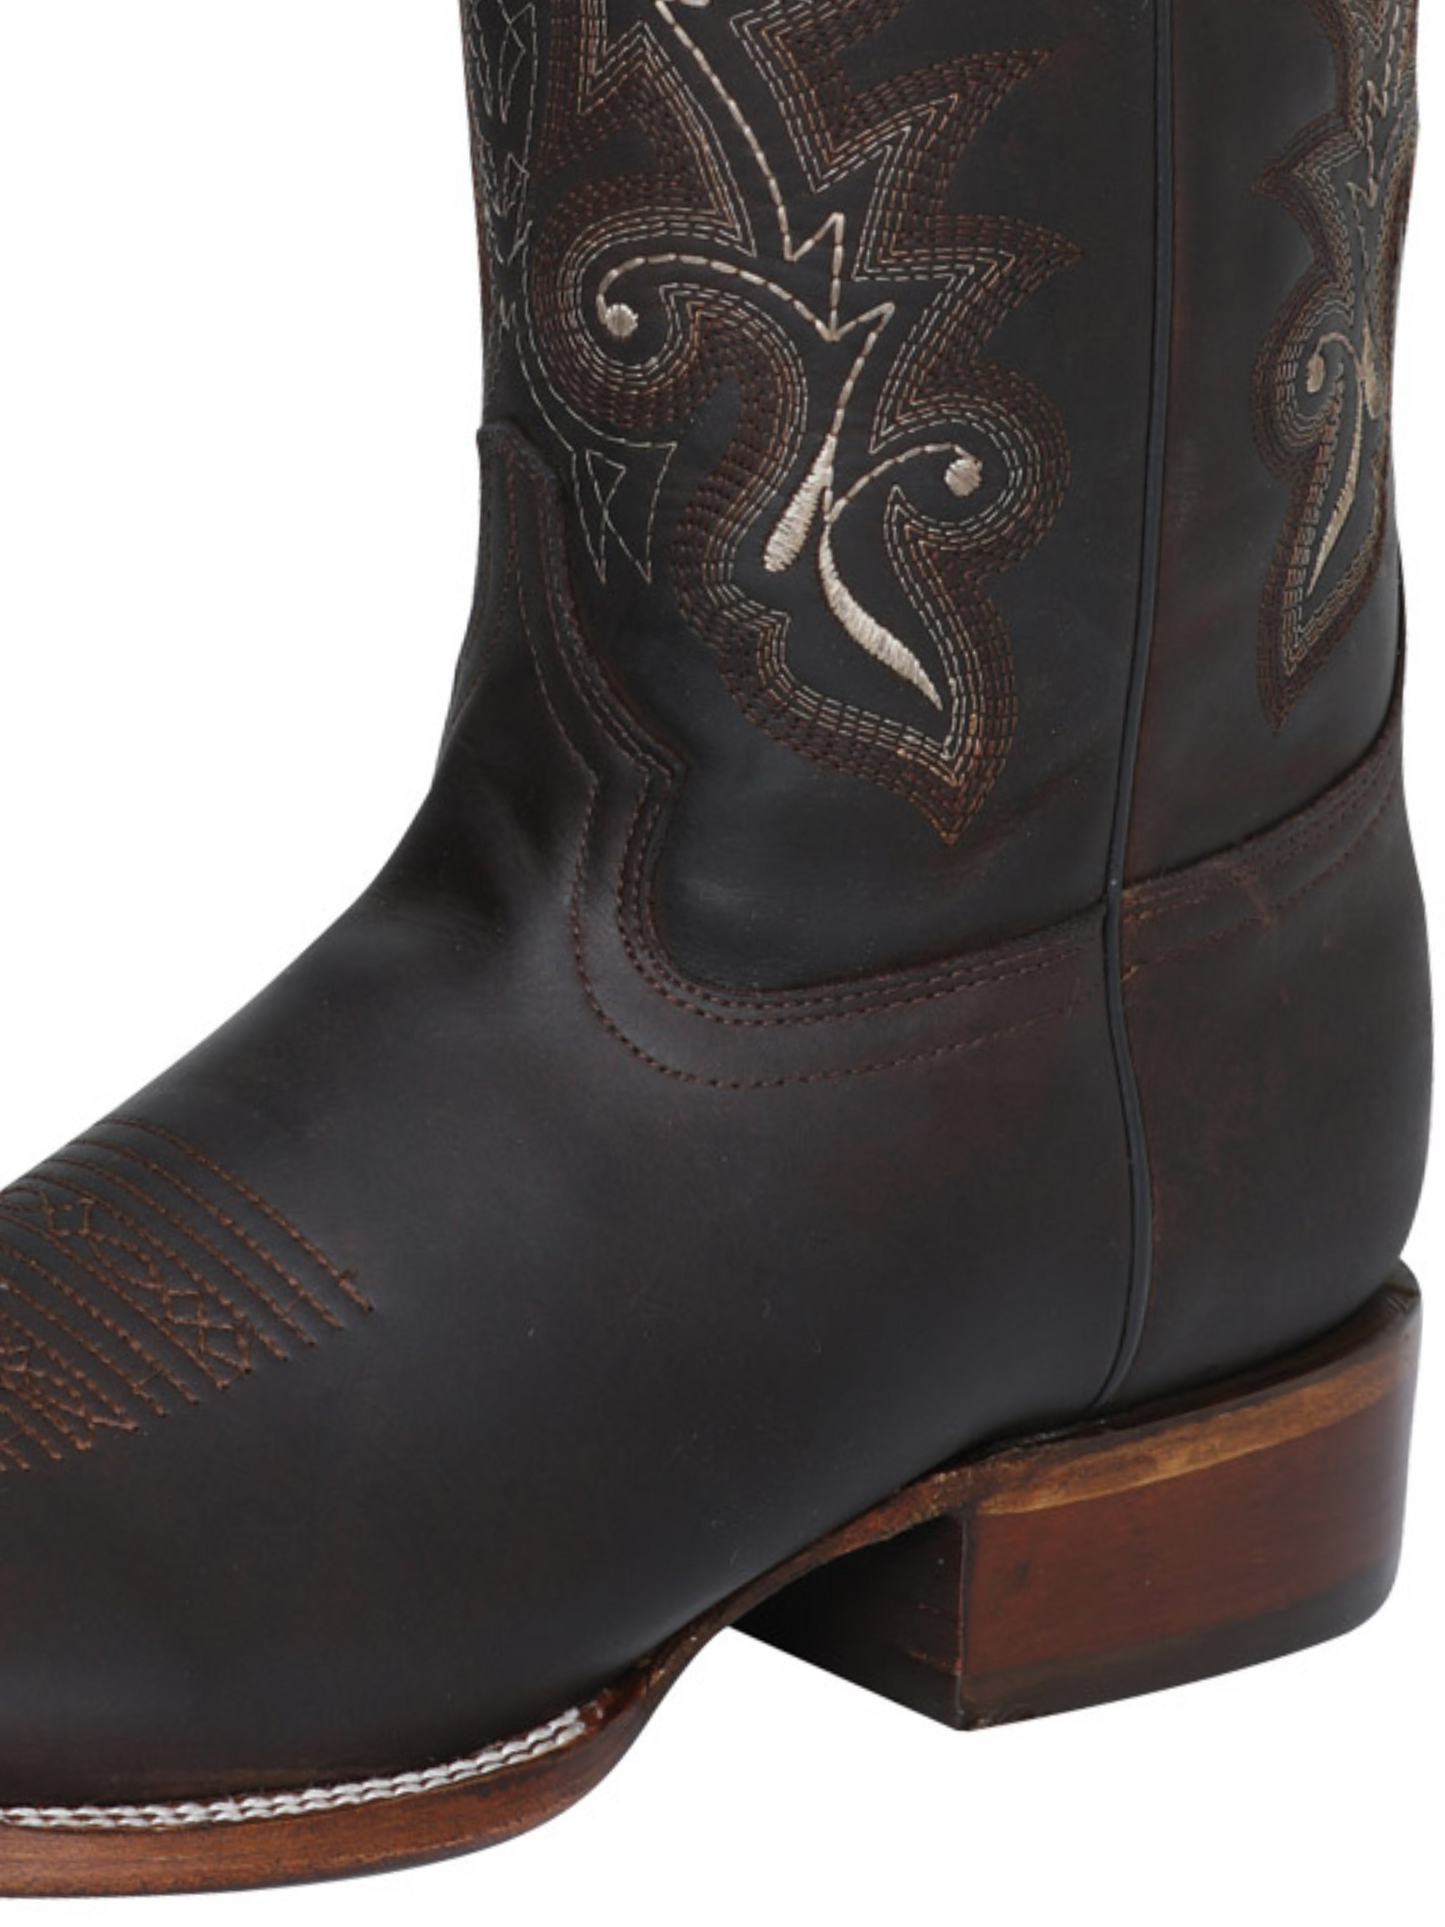 Classic Genuine Leather Rodeo Cowboy Boots for Men 'El Señor de los Cielos' - ID: 124067 Cowboy Boots El Señor de los Cielos